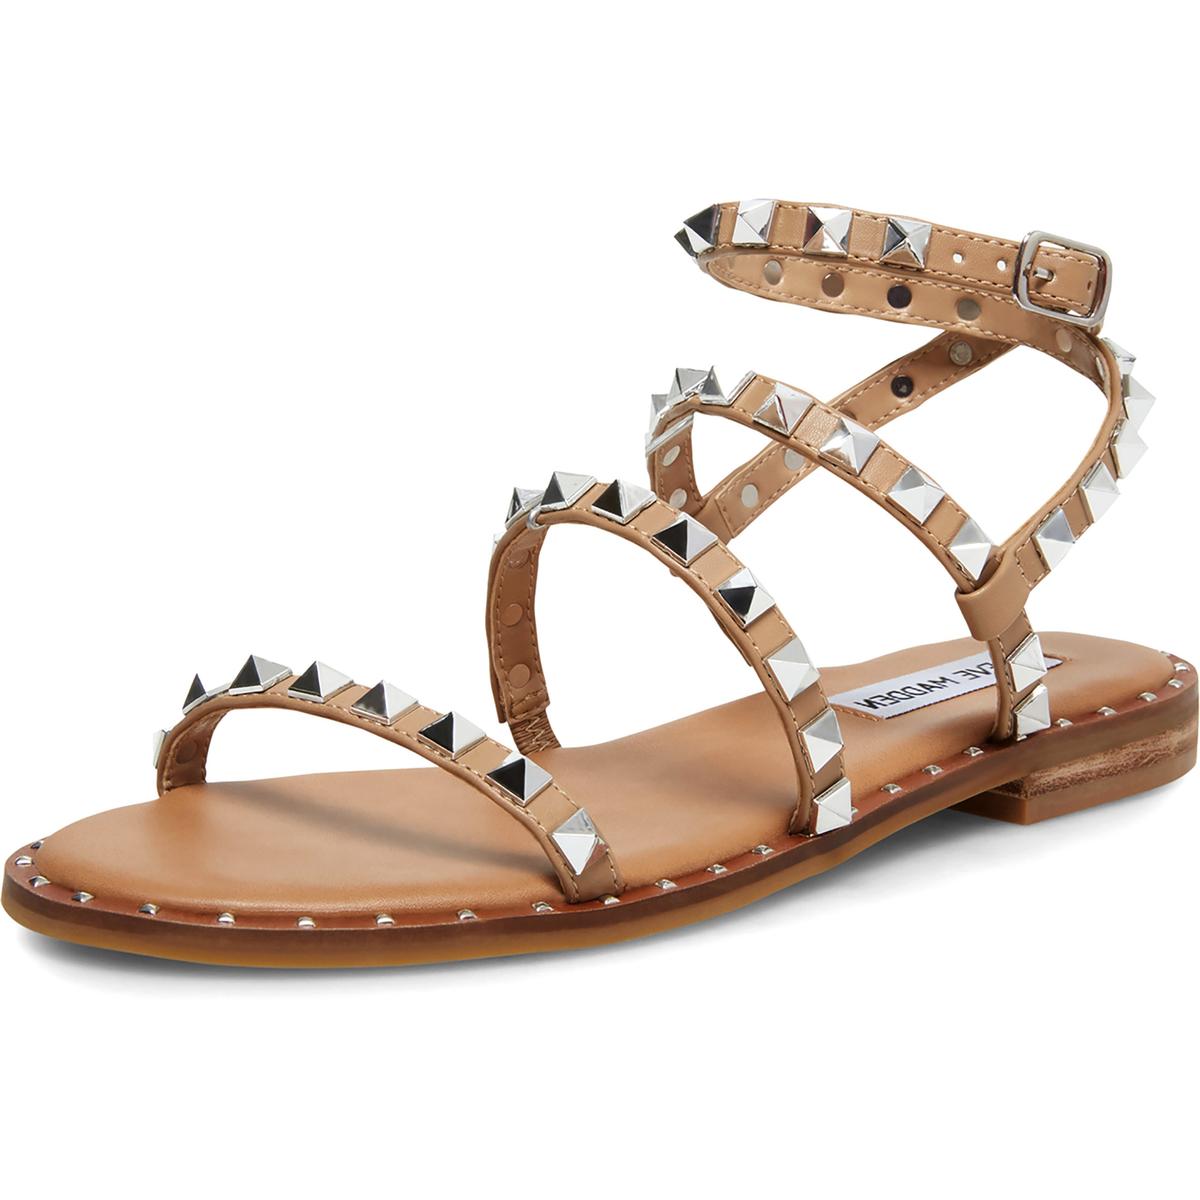 Steve Madden Womens Travel Tan Flat Sandals Shoes 6 Medium (B,M) BHFO ...